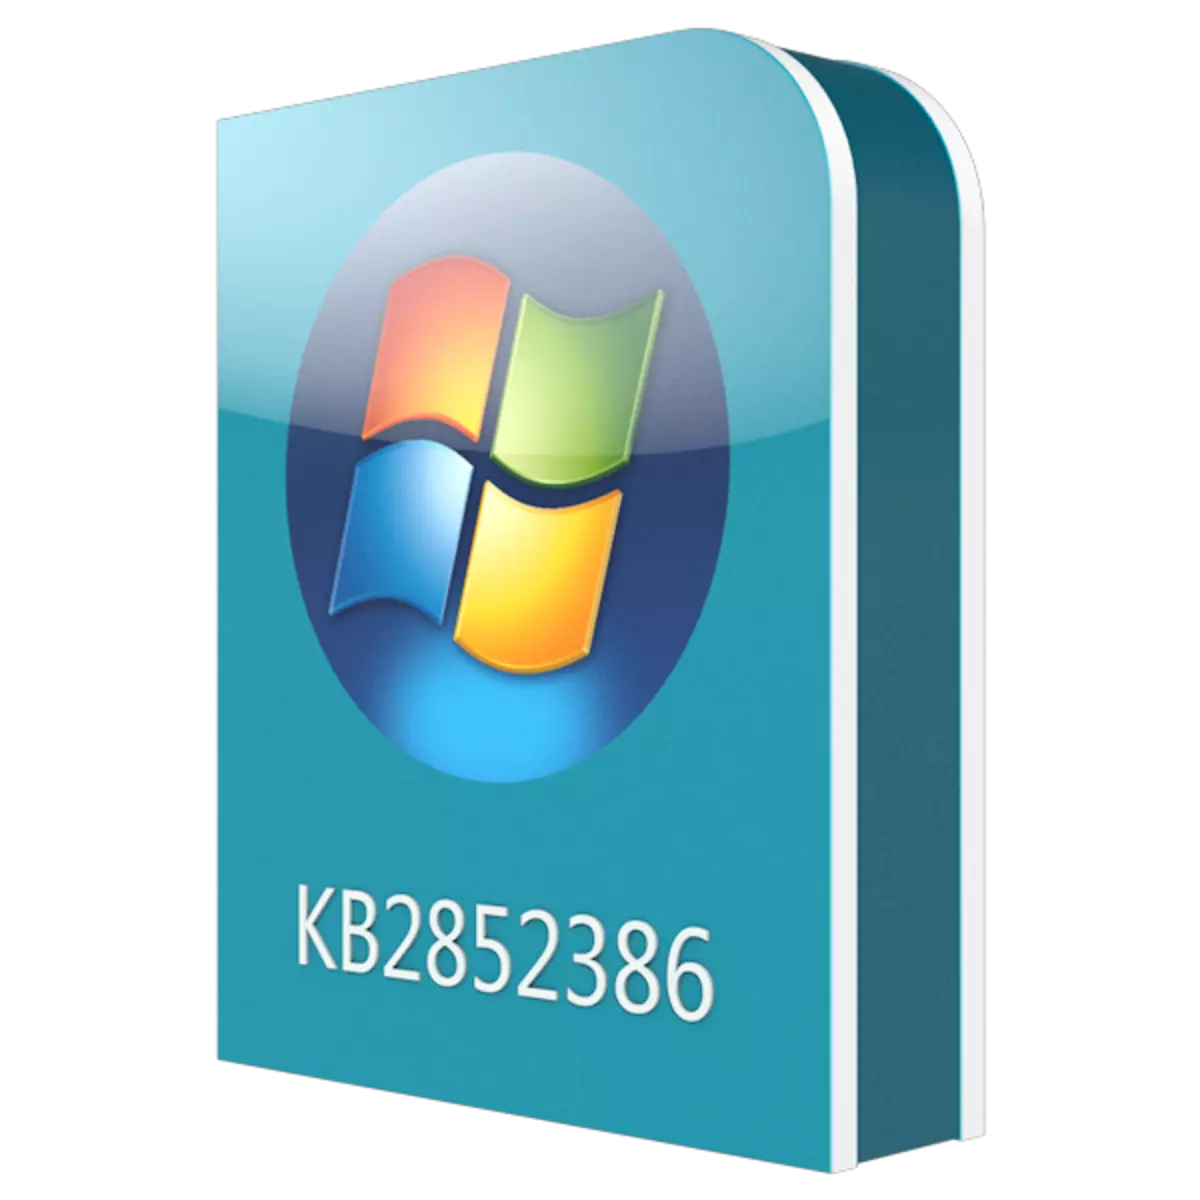 Download update KB2852386 Windows 7 x64